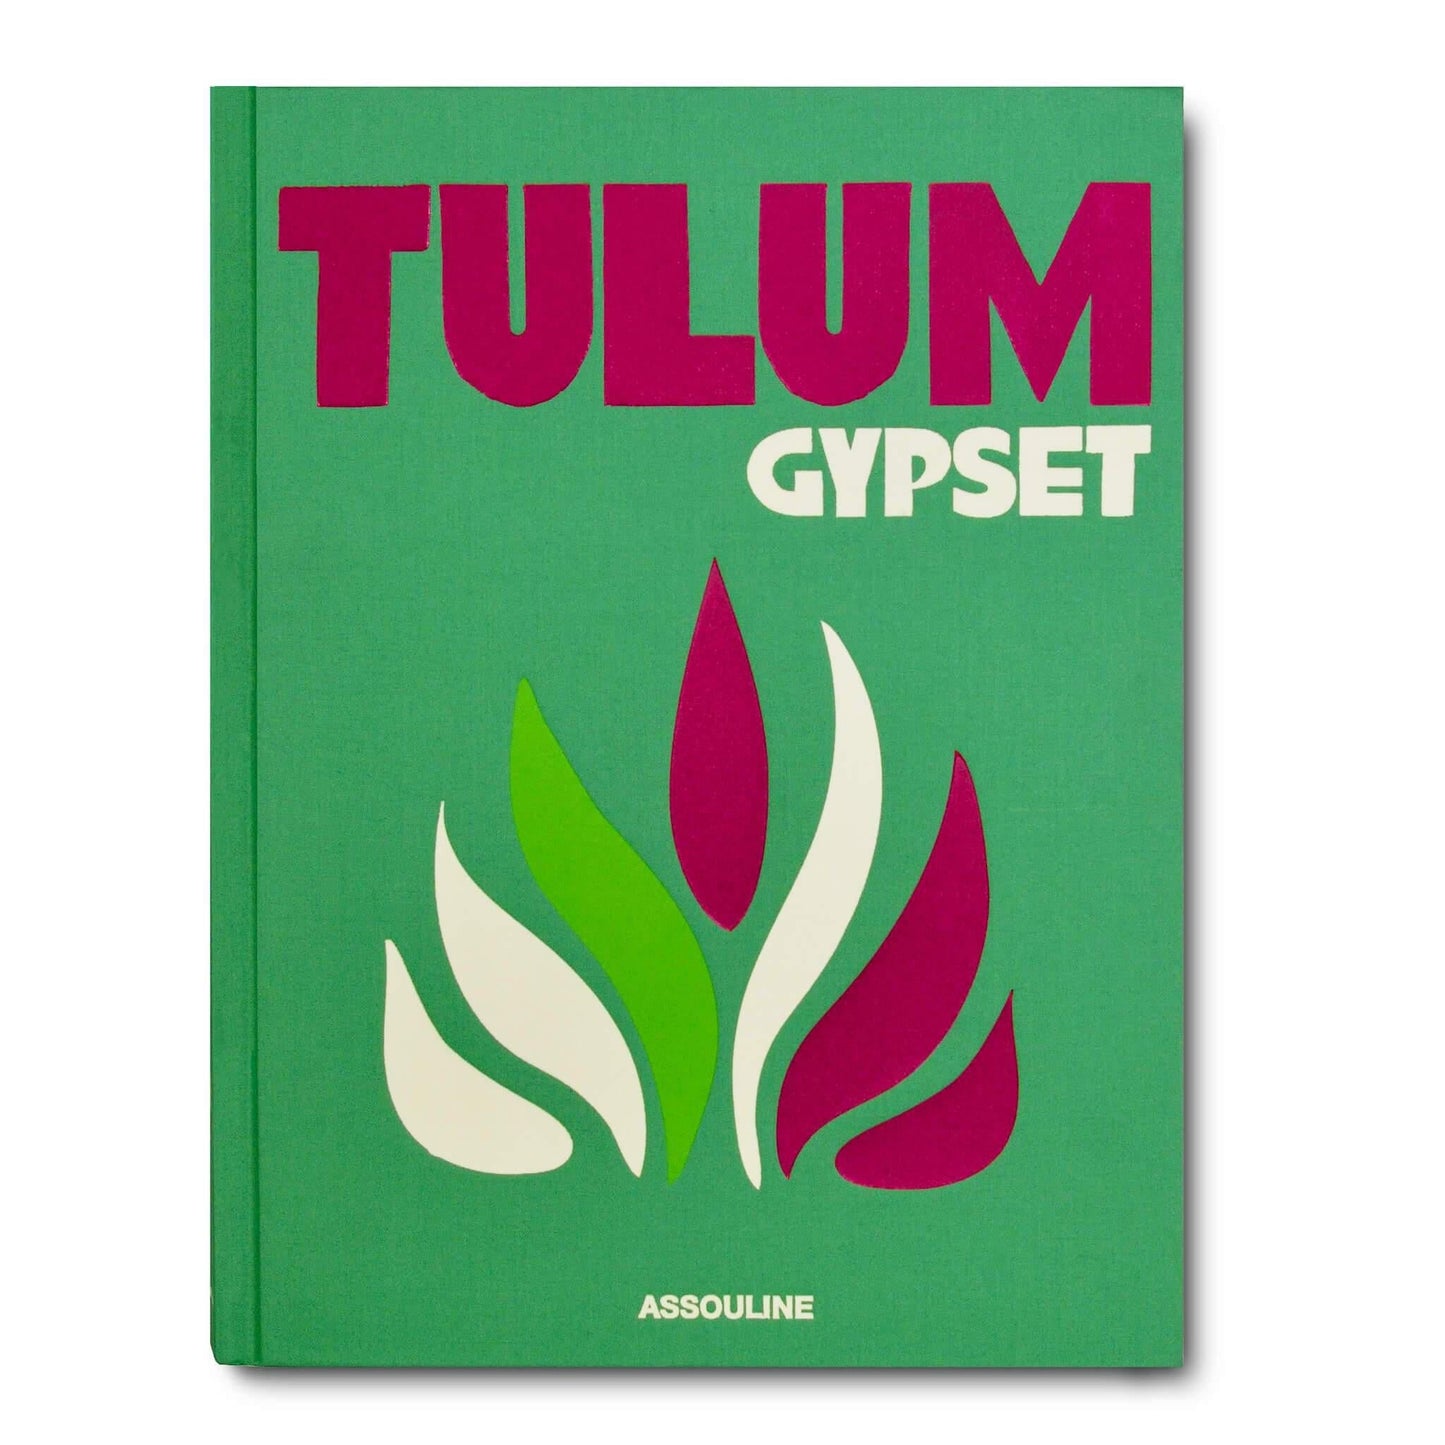 ASSOULINE - 'Tulum Gypset' Book - The Epicurean Trader